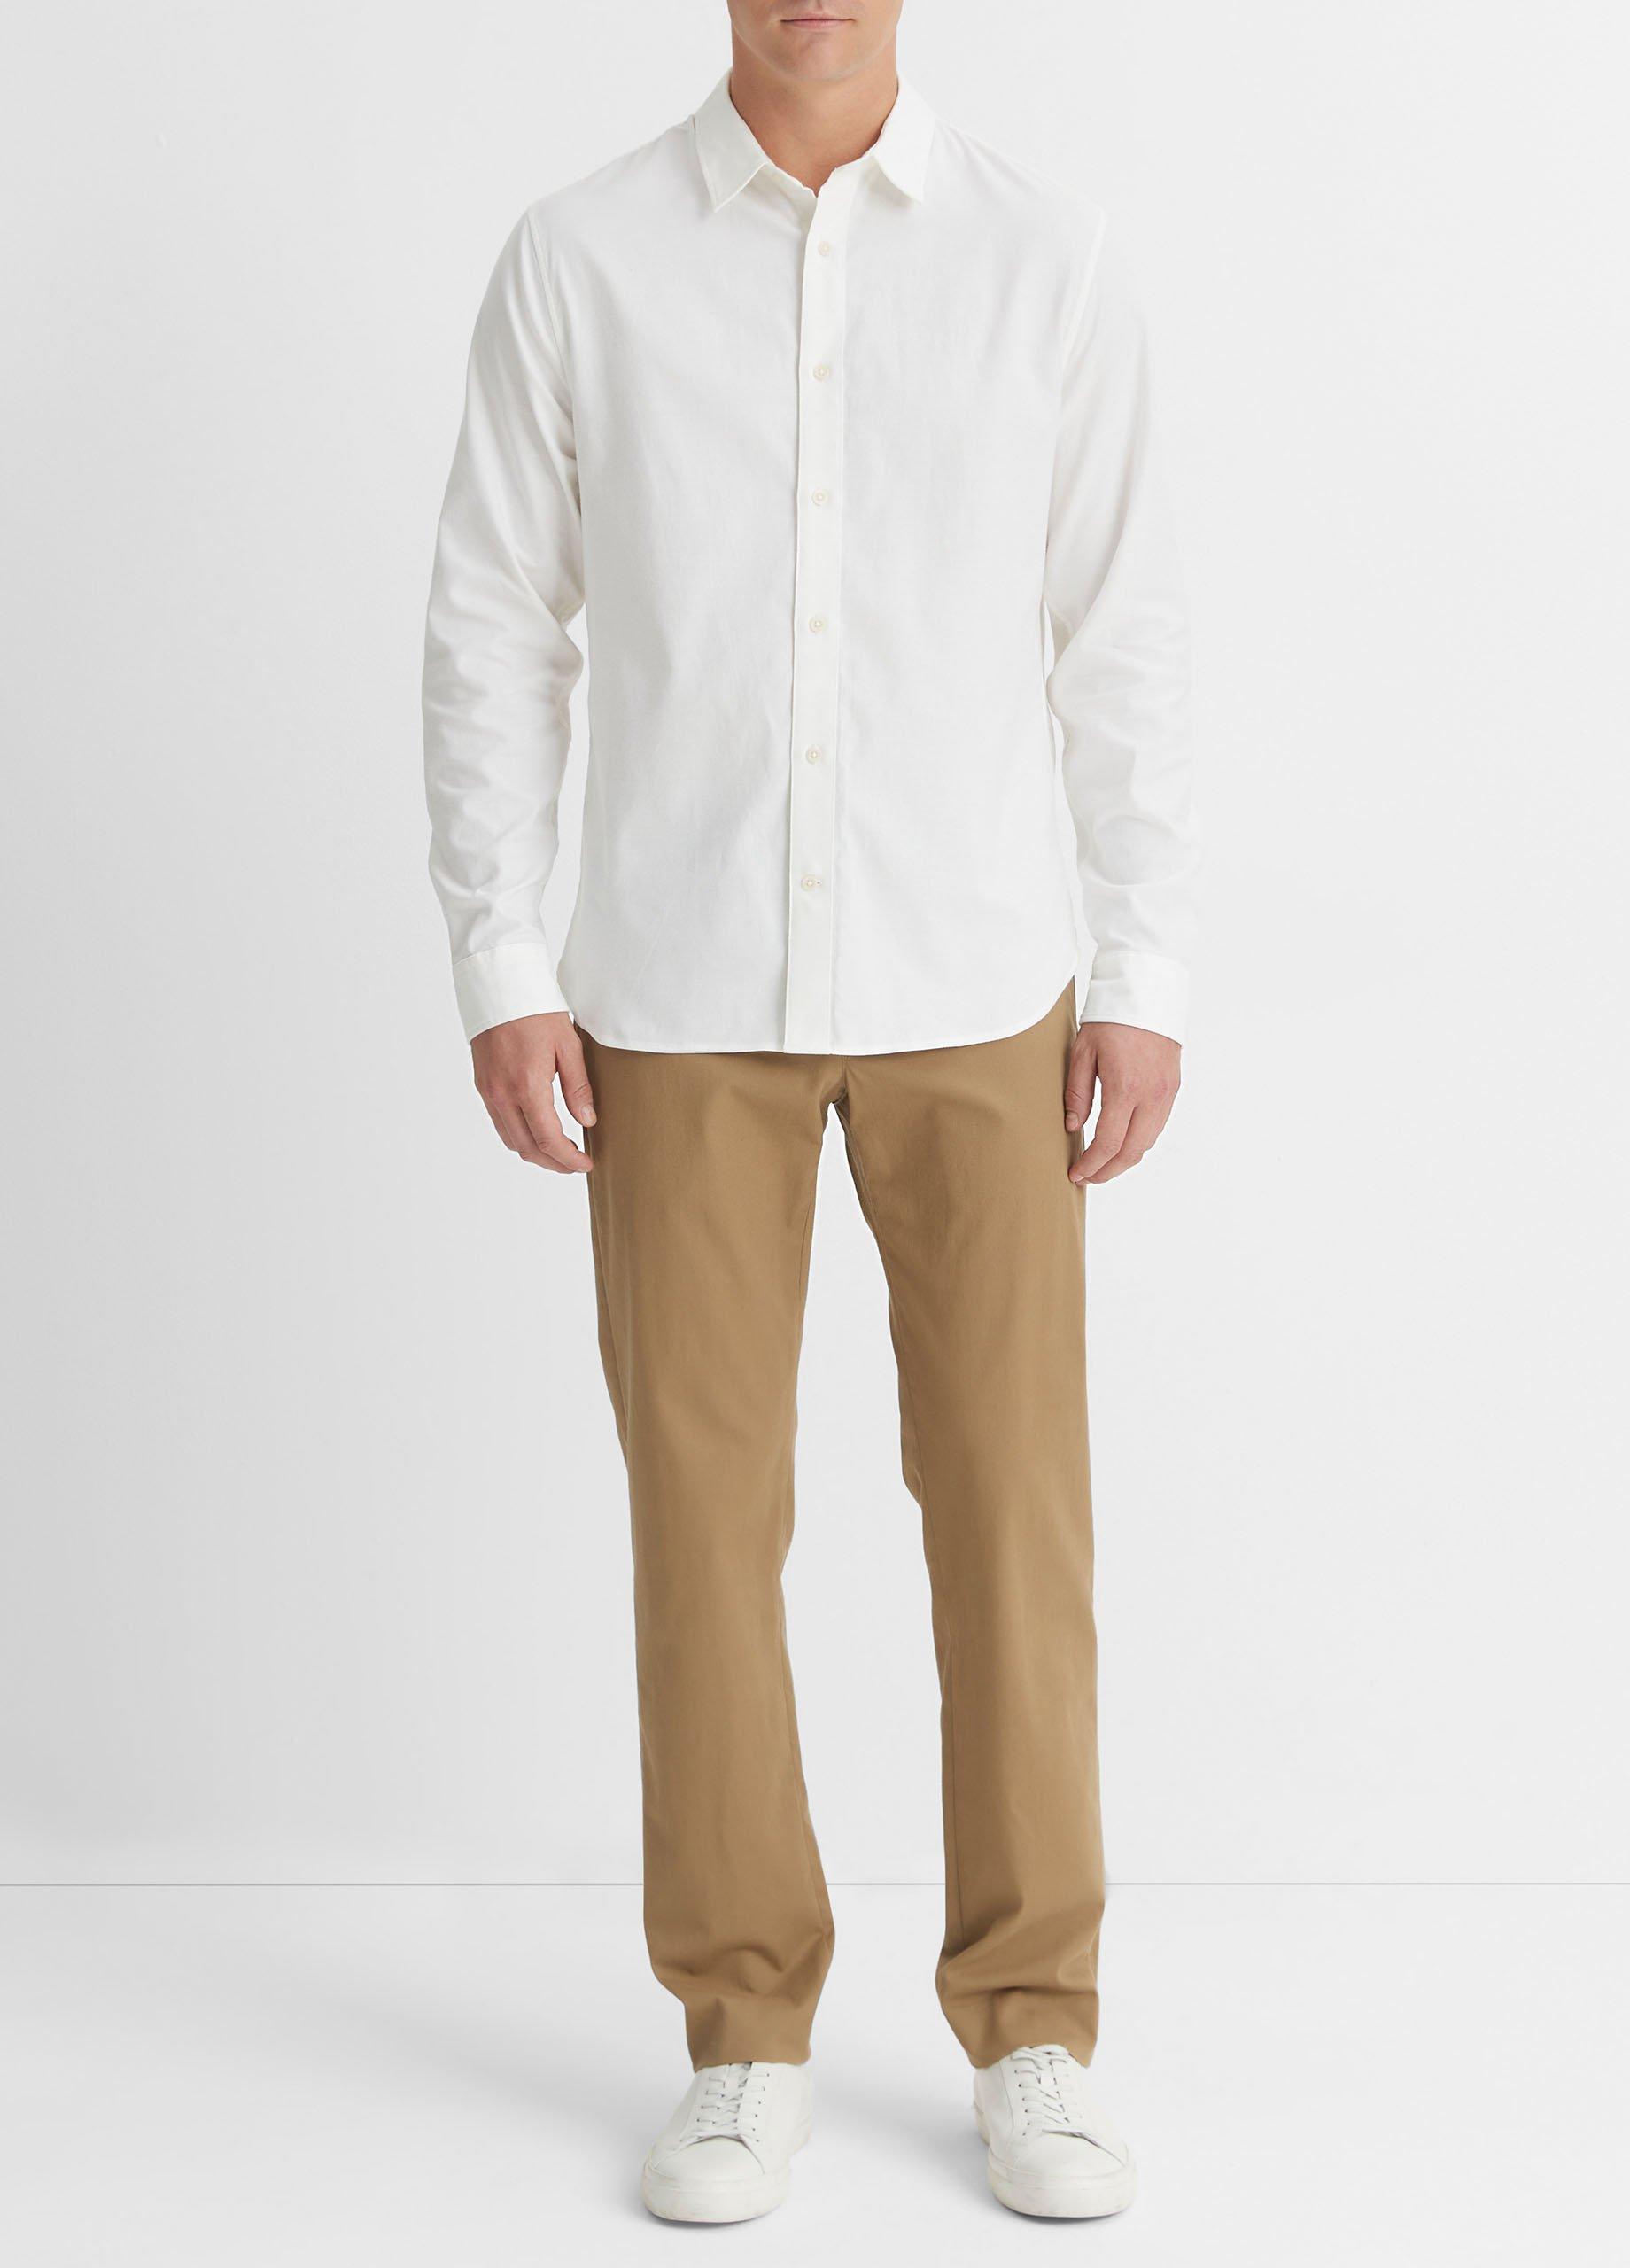 Stretch Oxford Long-Sleeve Shirt, Optic White, Size XXL Vince